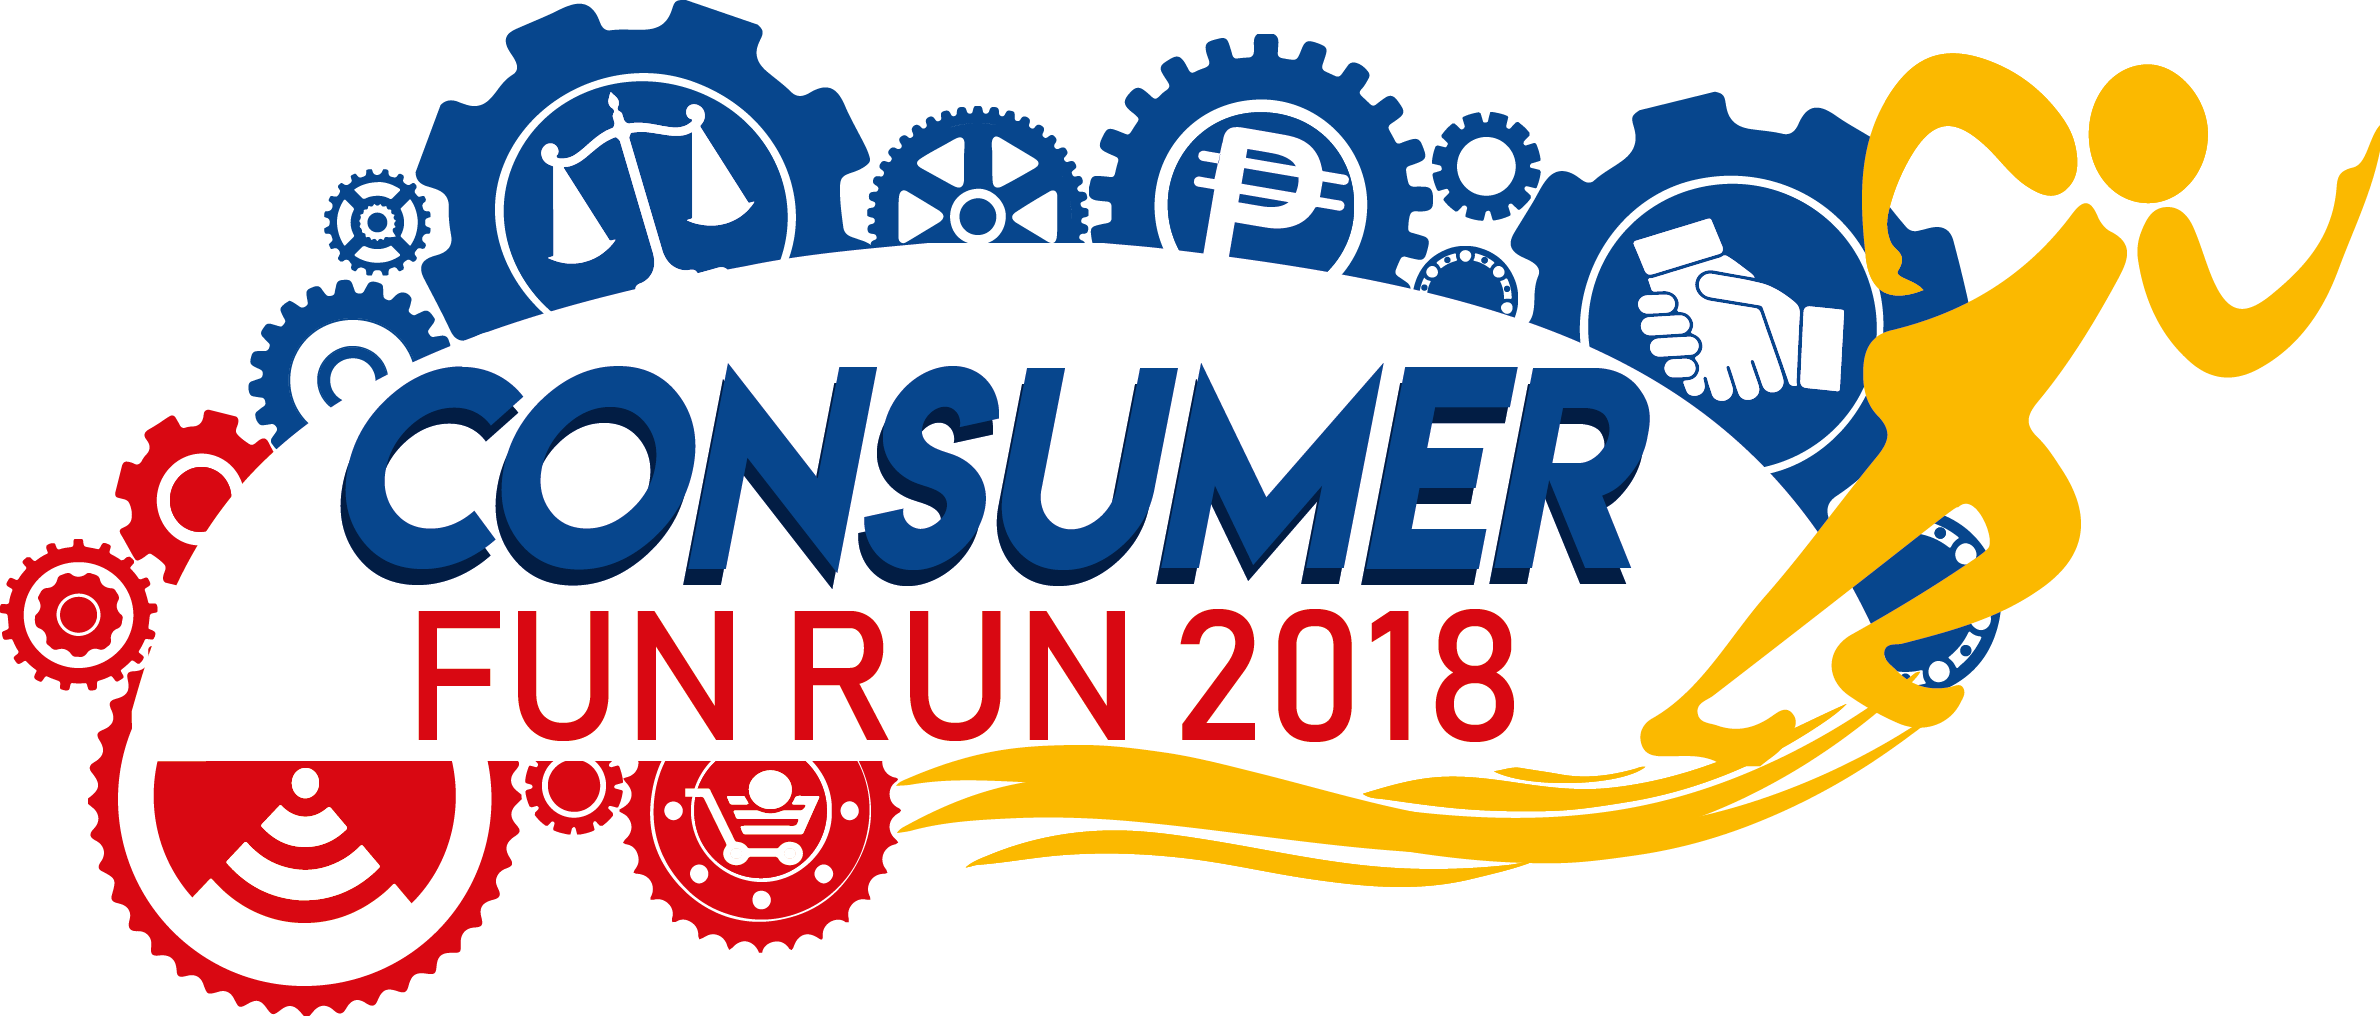 DTI Consumer Fun Run 2018